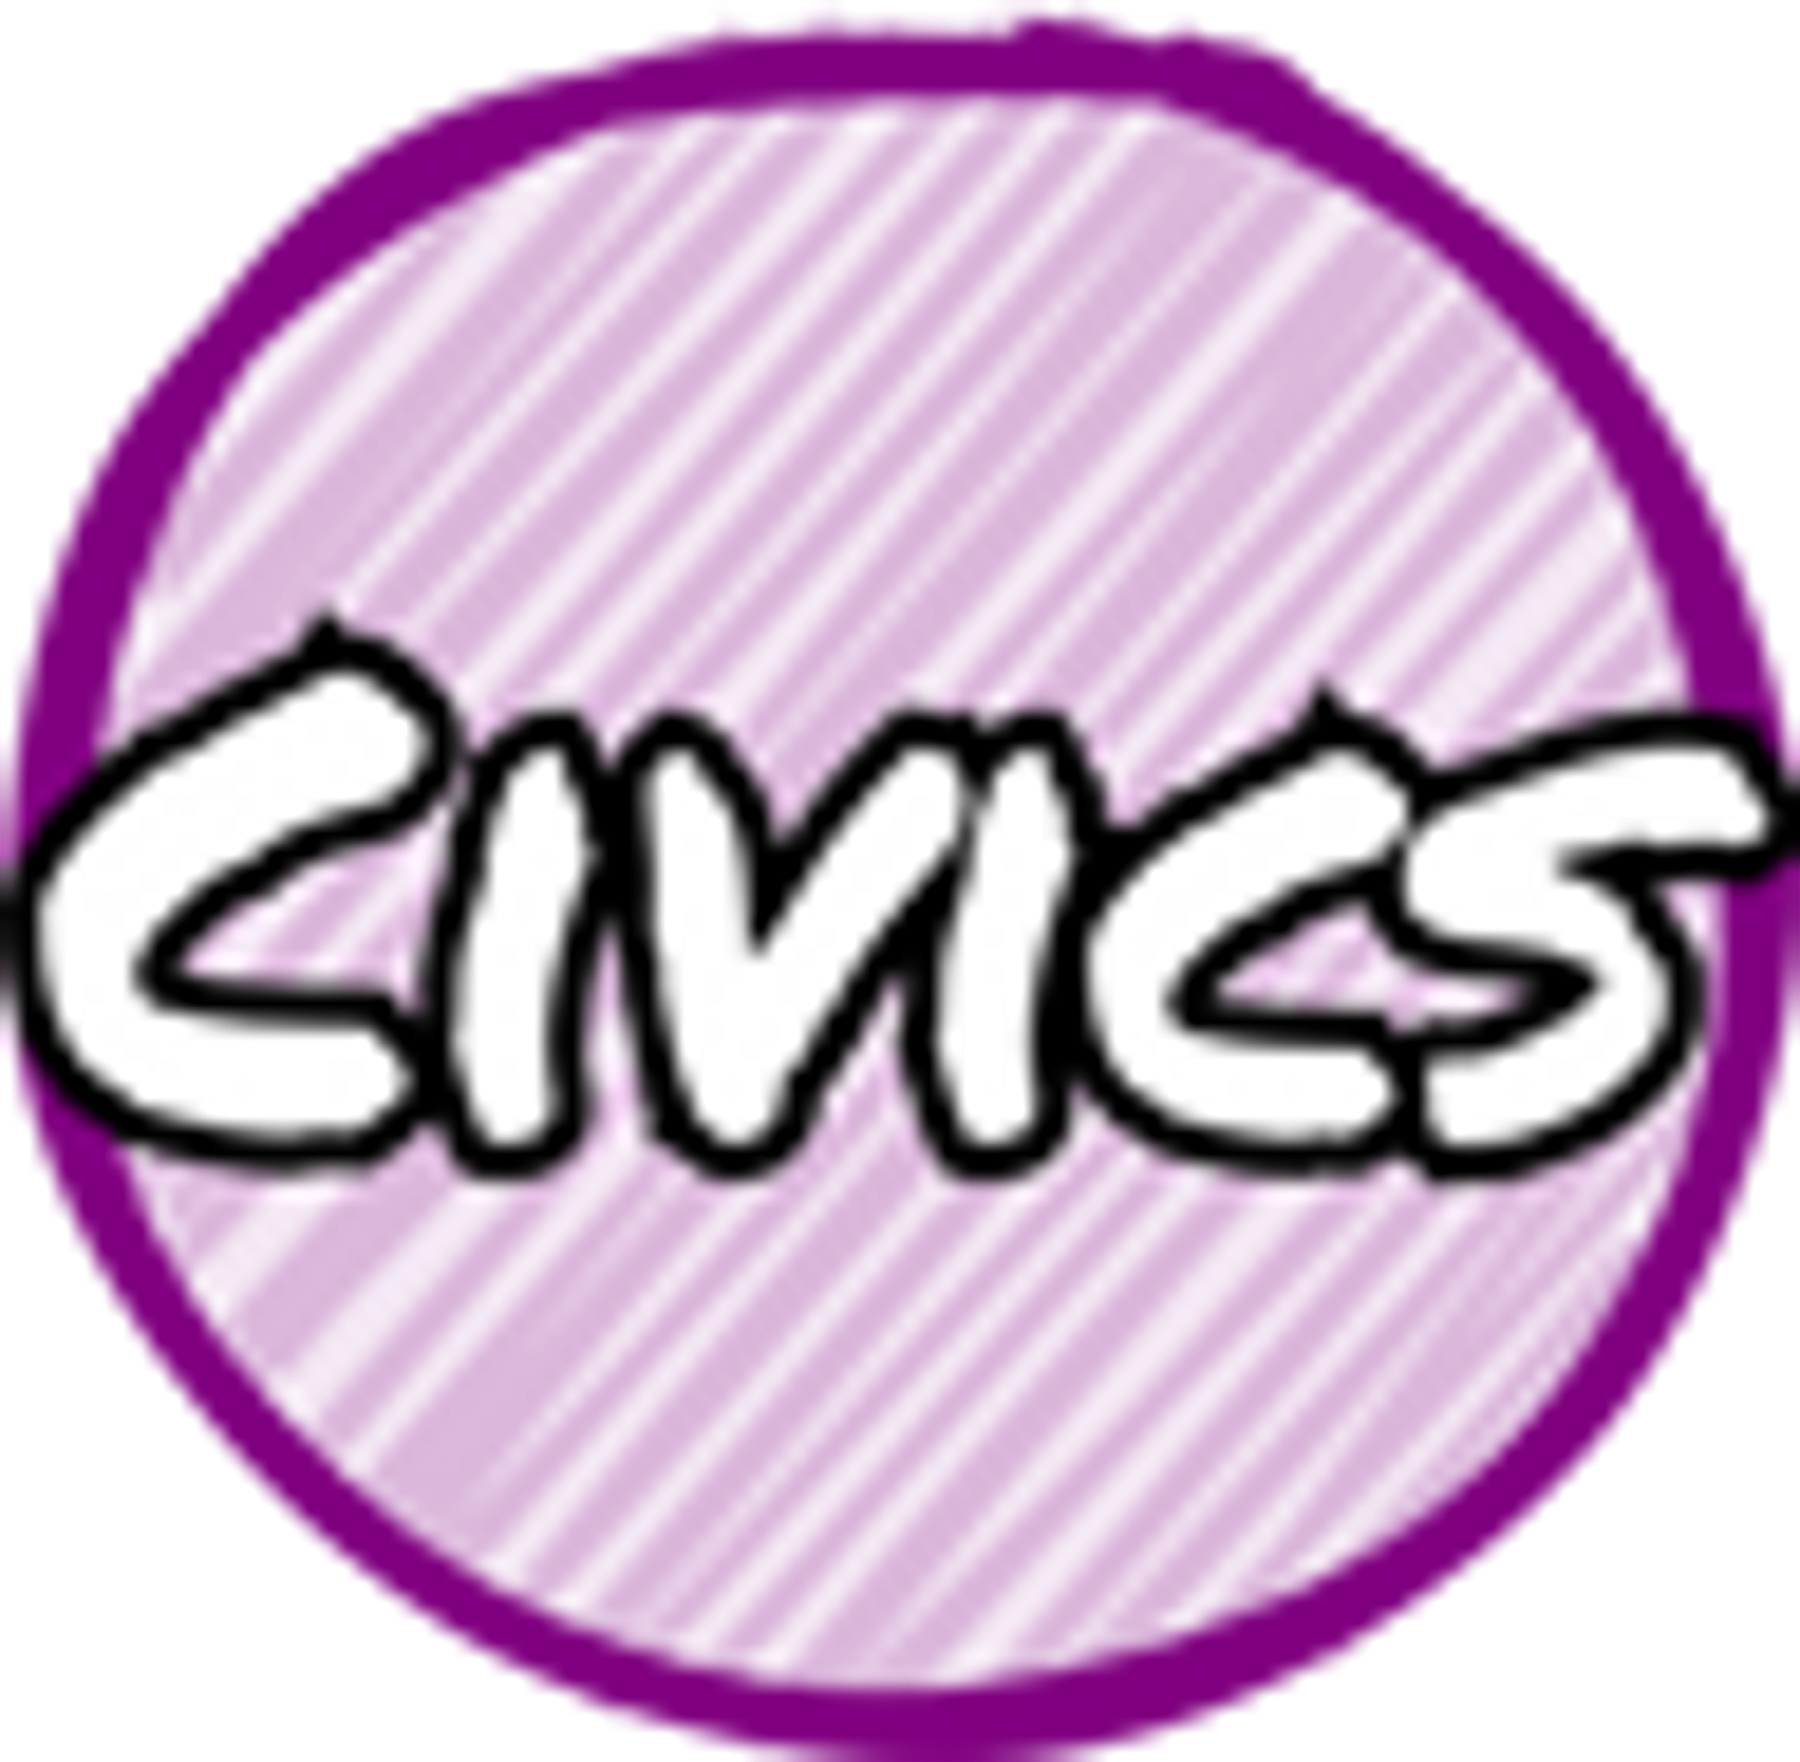 Civics | Blog by John Guerra